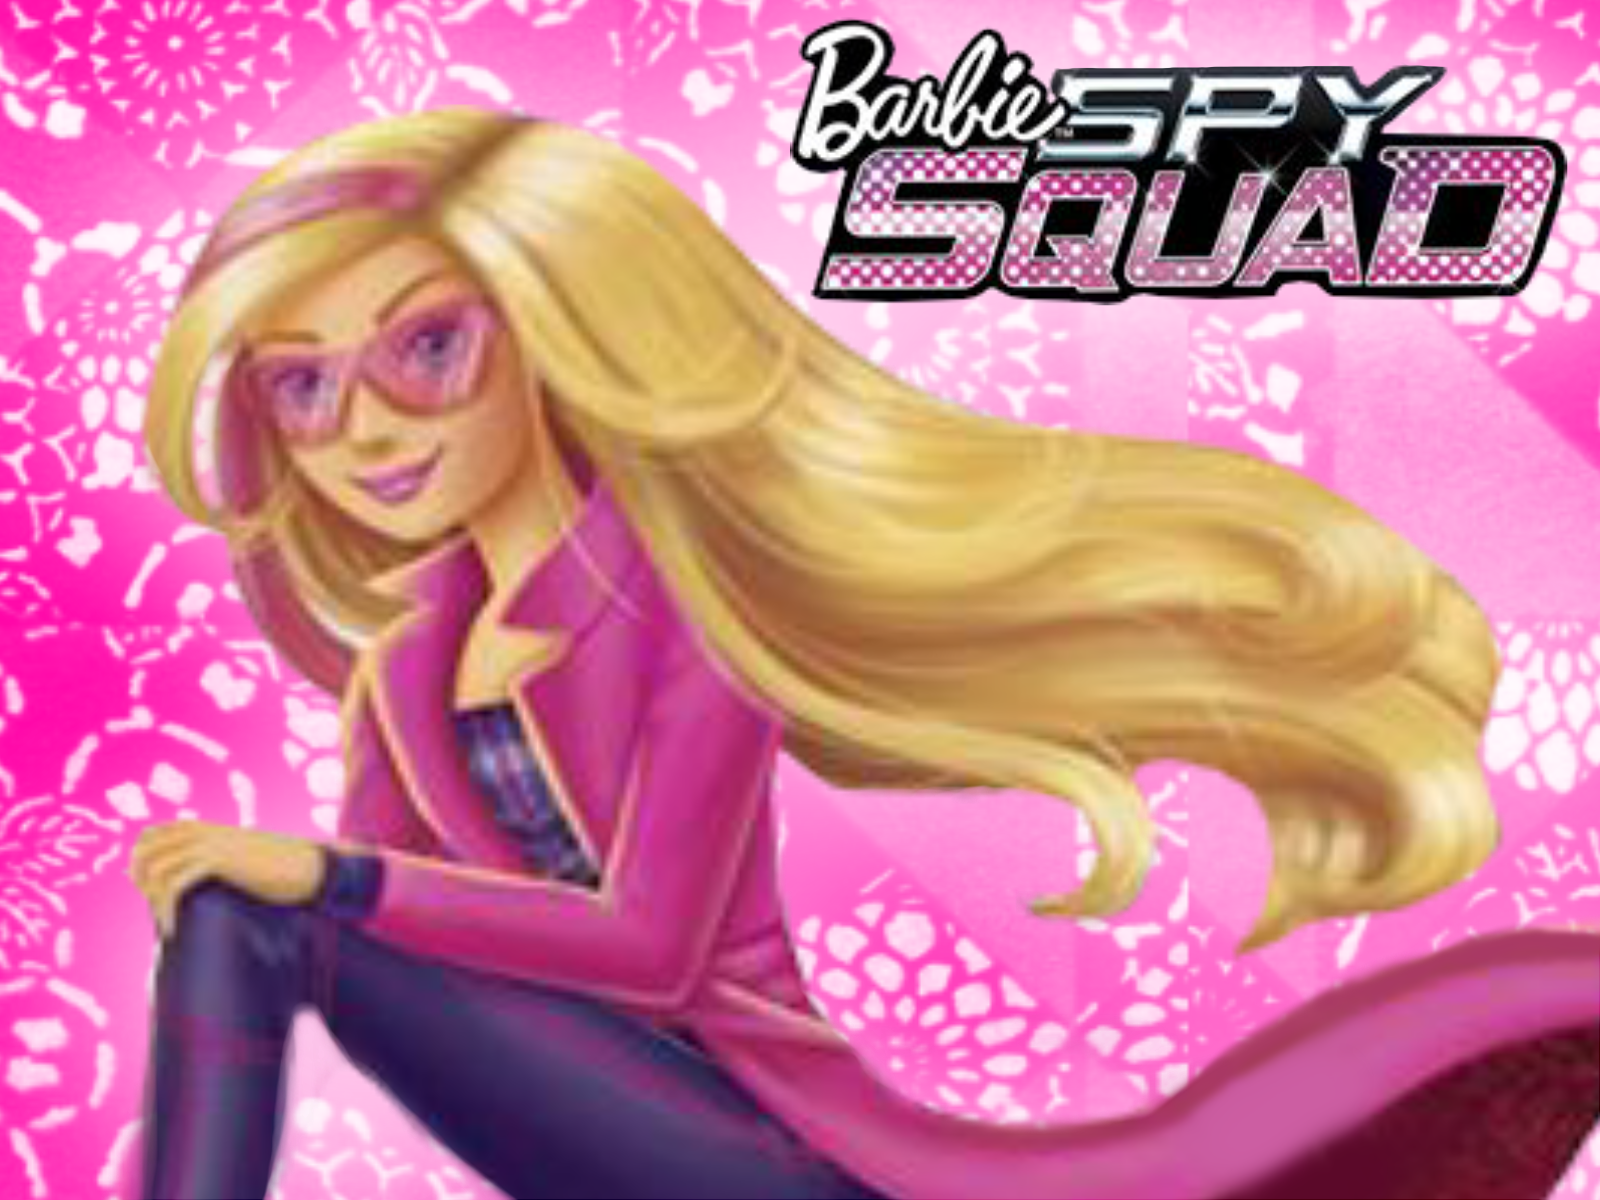 barbie-spy-squad-wallpaper-barbie-movies-wallpaper-38901191-fanpop